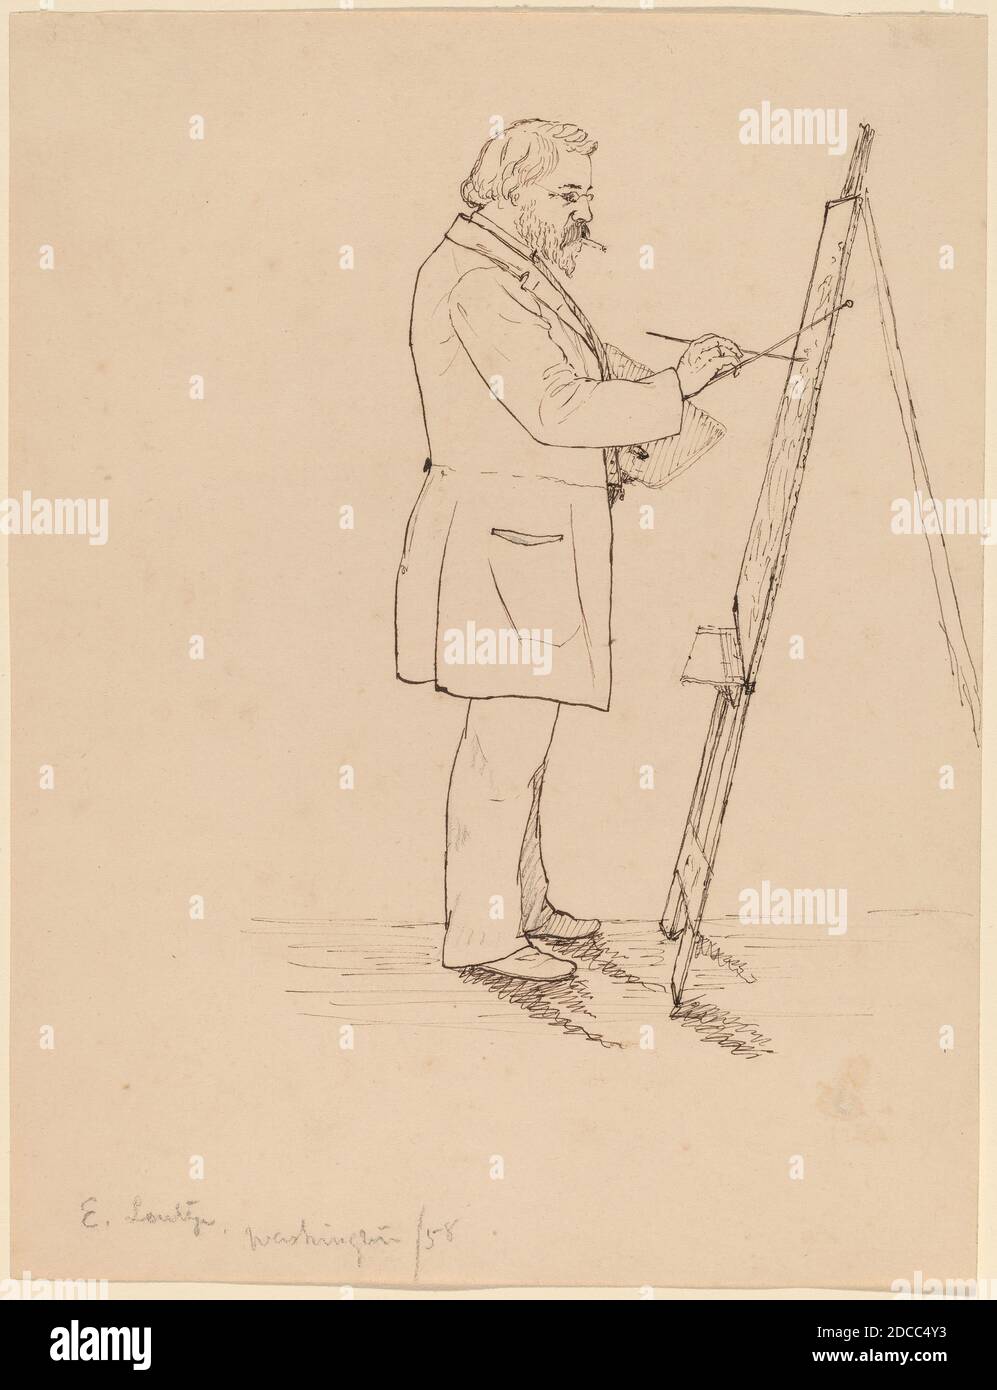 John Quincy Adams Ward, (artist), American, 1830 - 1910, Sketching - Emanuel Leutze, 1858, pen and brown ink over graphite on wove paper, sheet: 21.9 × 16.9 cm (8 5/8 × 6 5/8 in Stock Photo